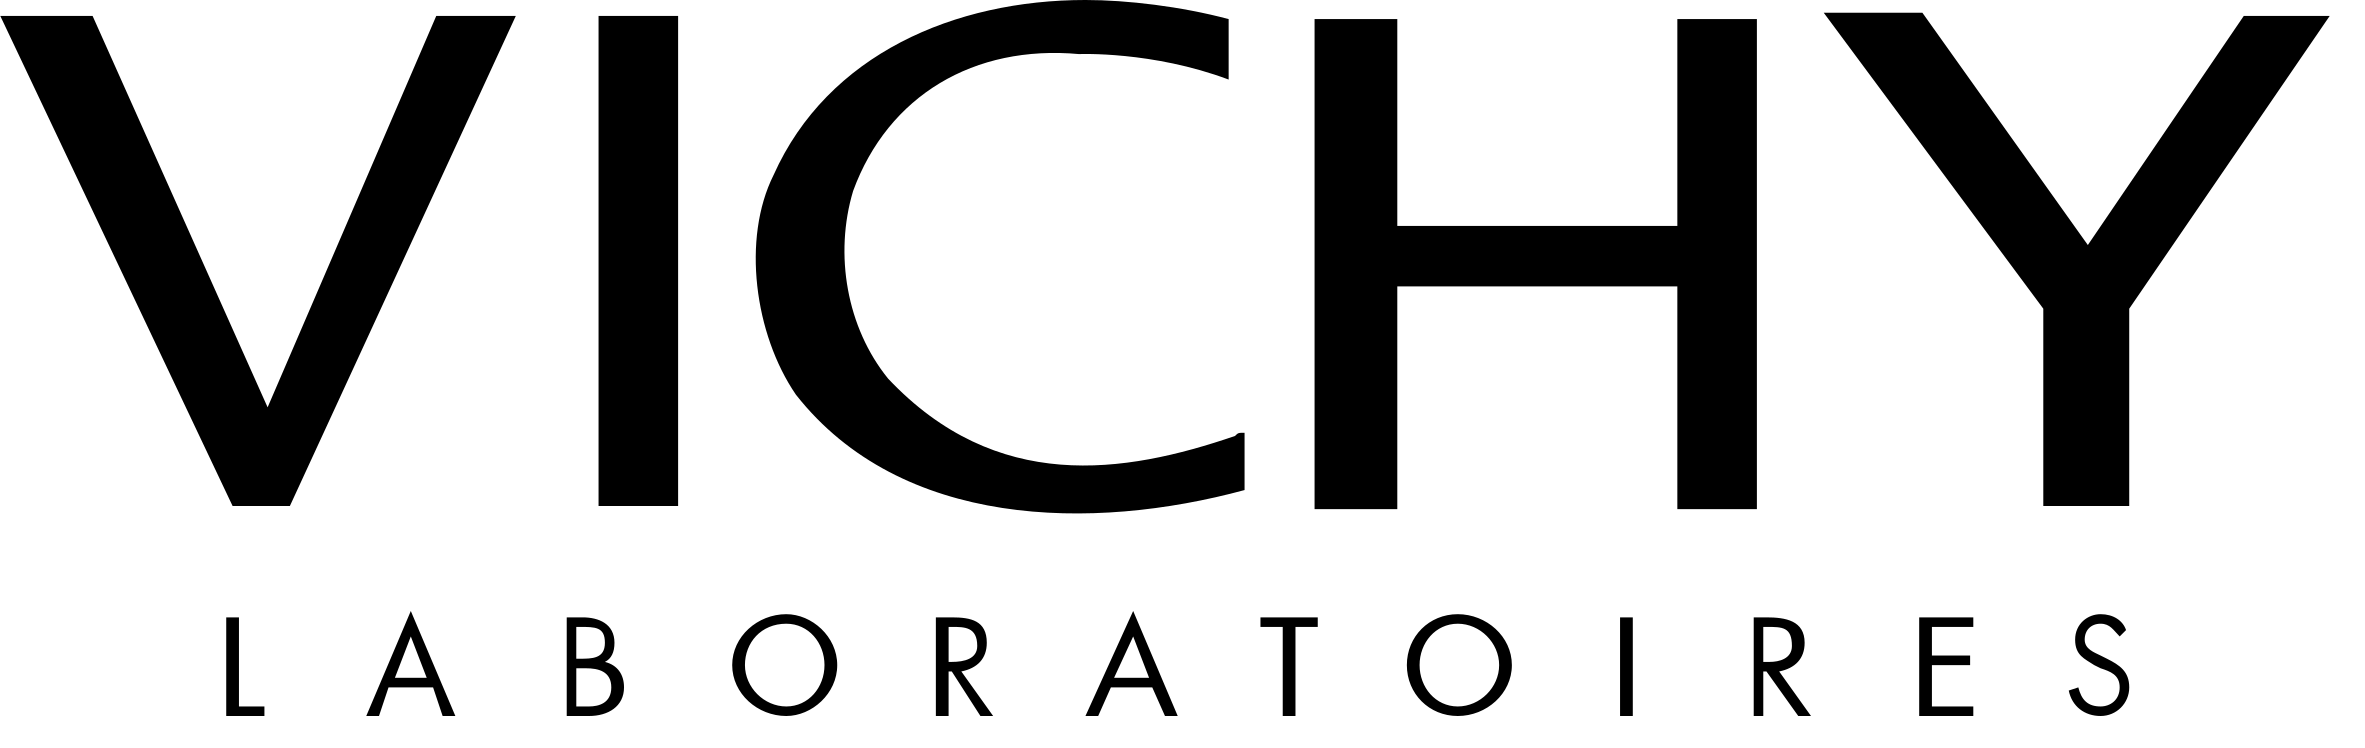 CROP_vichy-1-logo-png-transparent